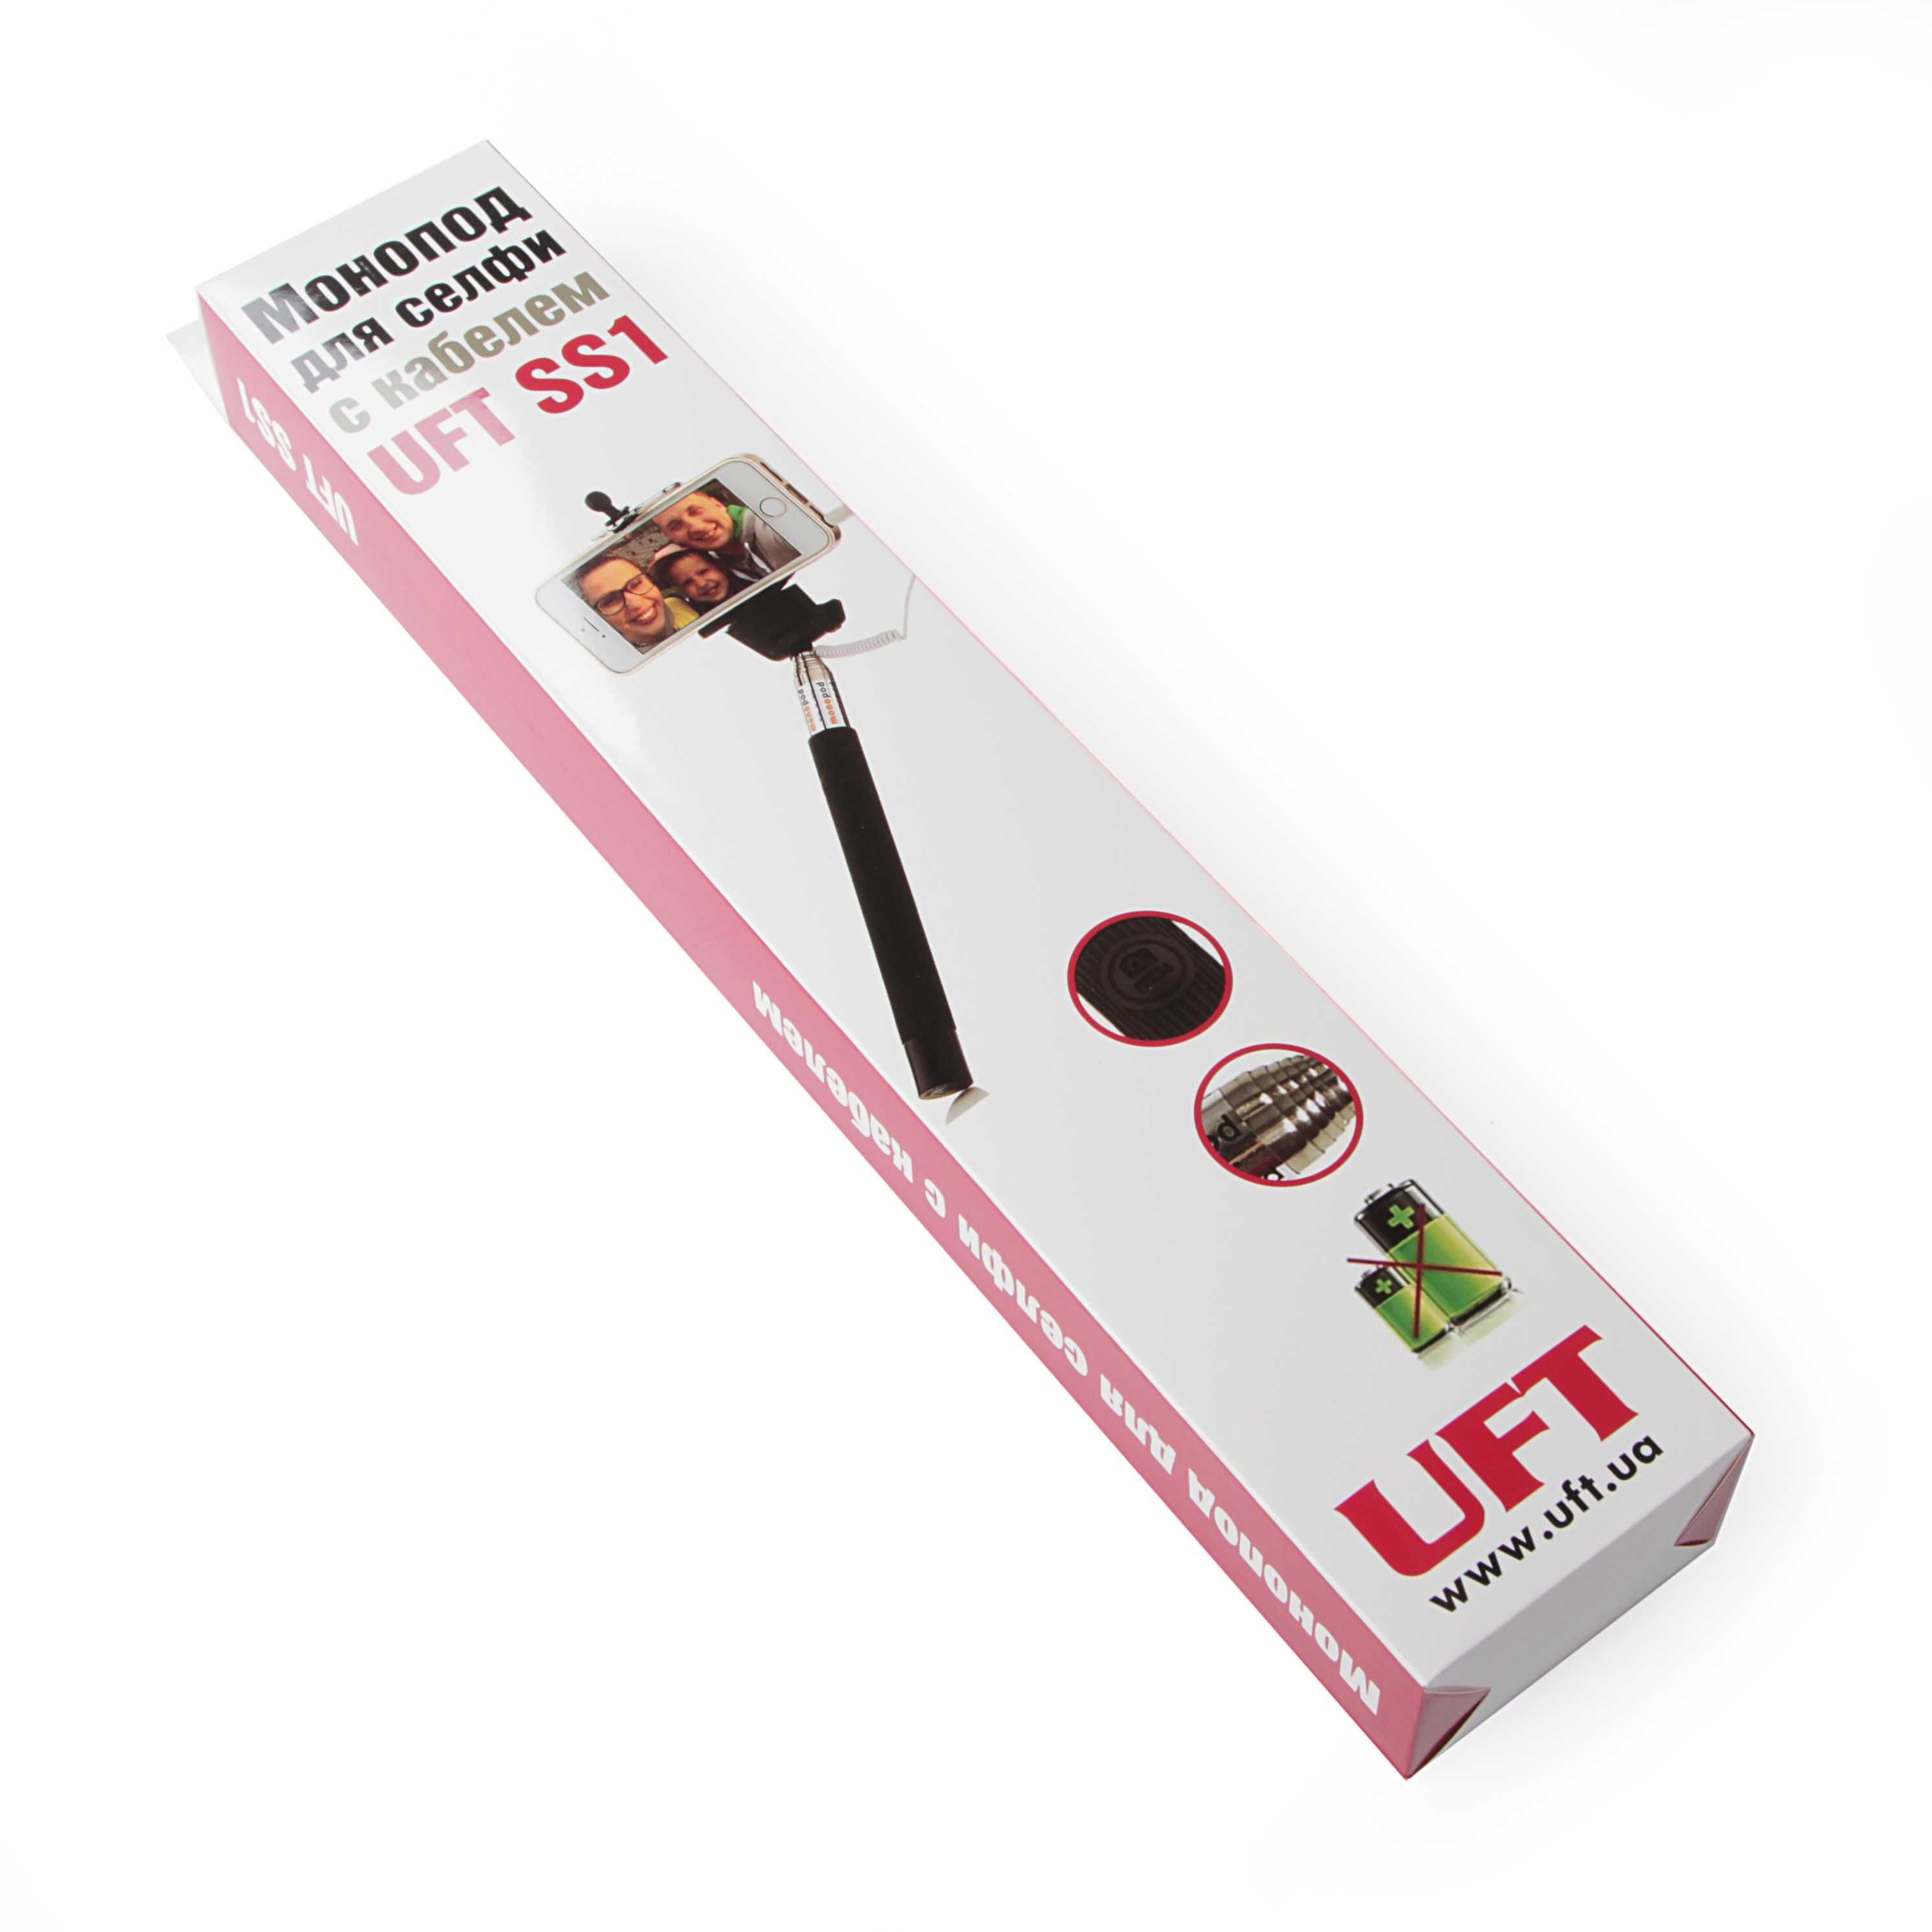 Селфі-монопод UFT SS1 з кабелем